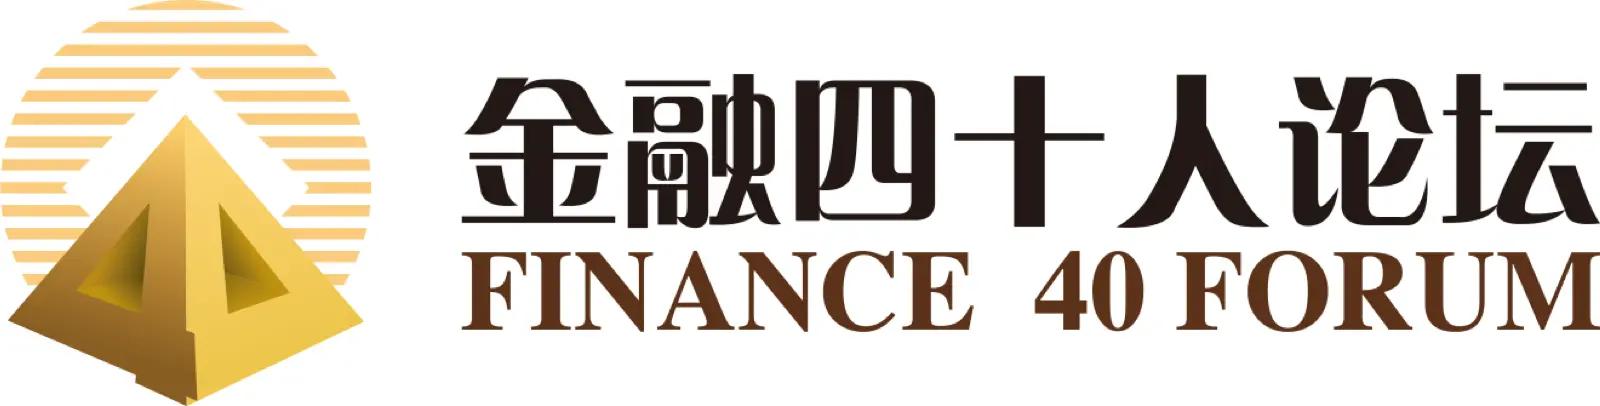 China Finance 40 Forum